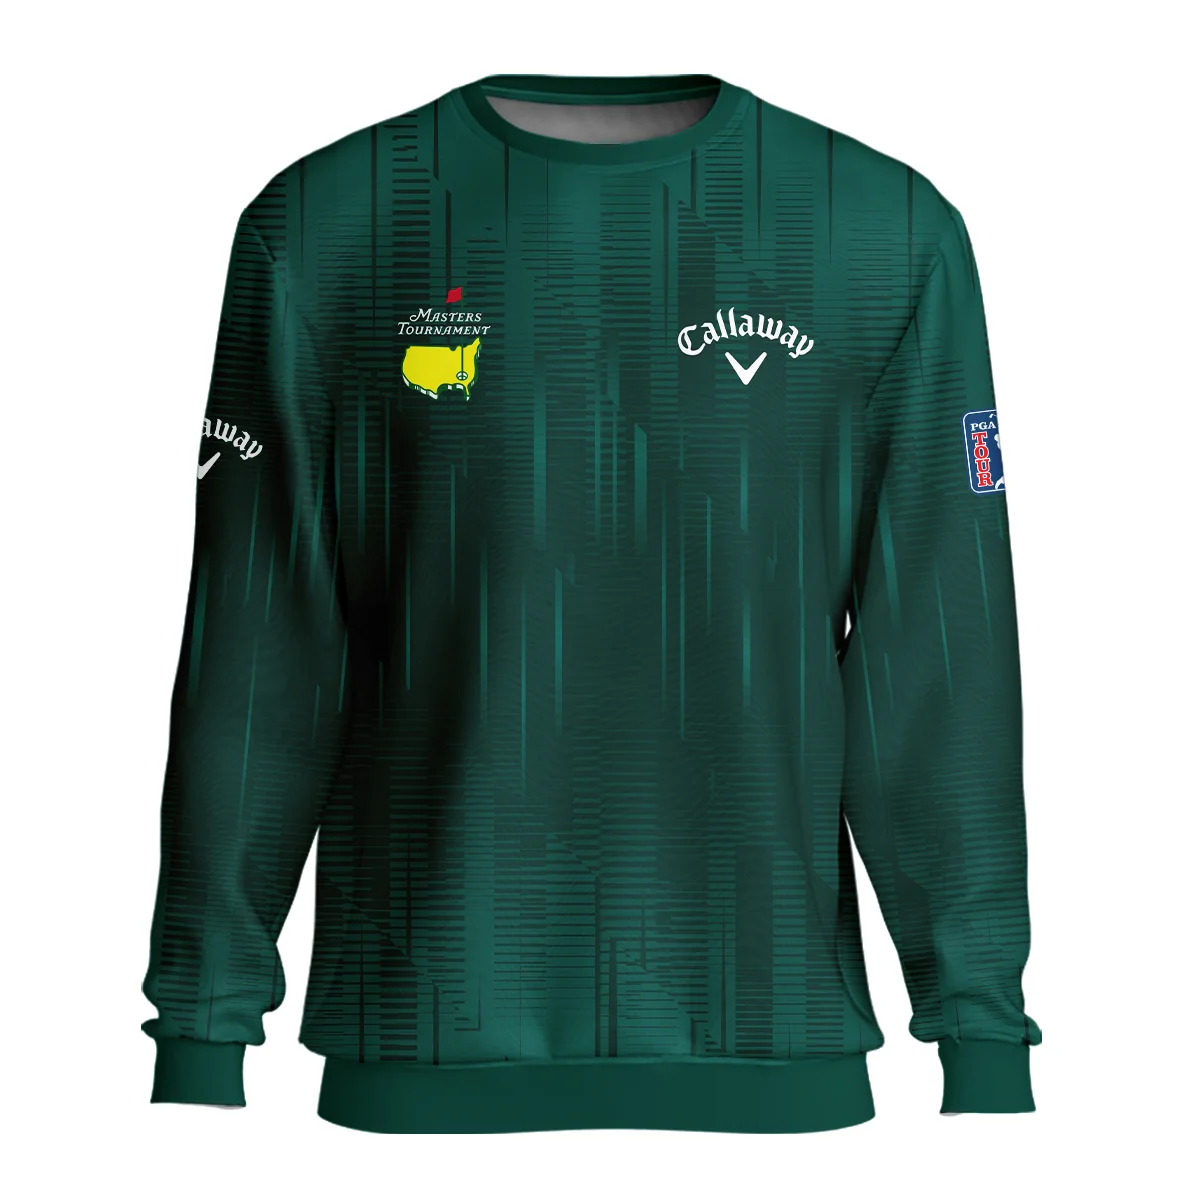 Masters Tournament Callaway Dark Green Gradient Stripes Pattern Unisex Sweatshirt Style Classic Sweatshirt